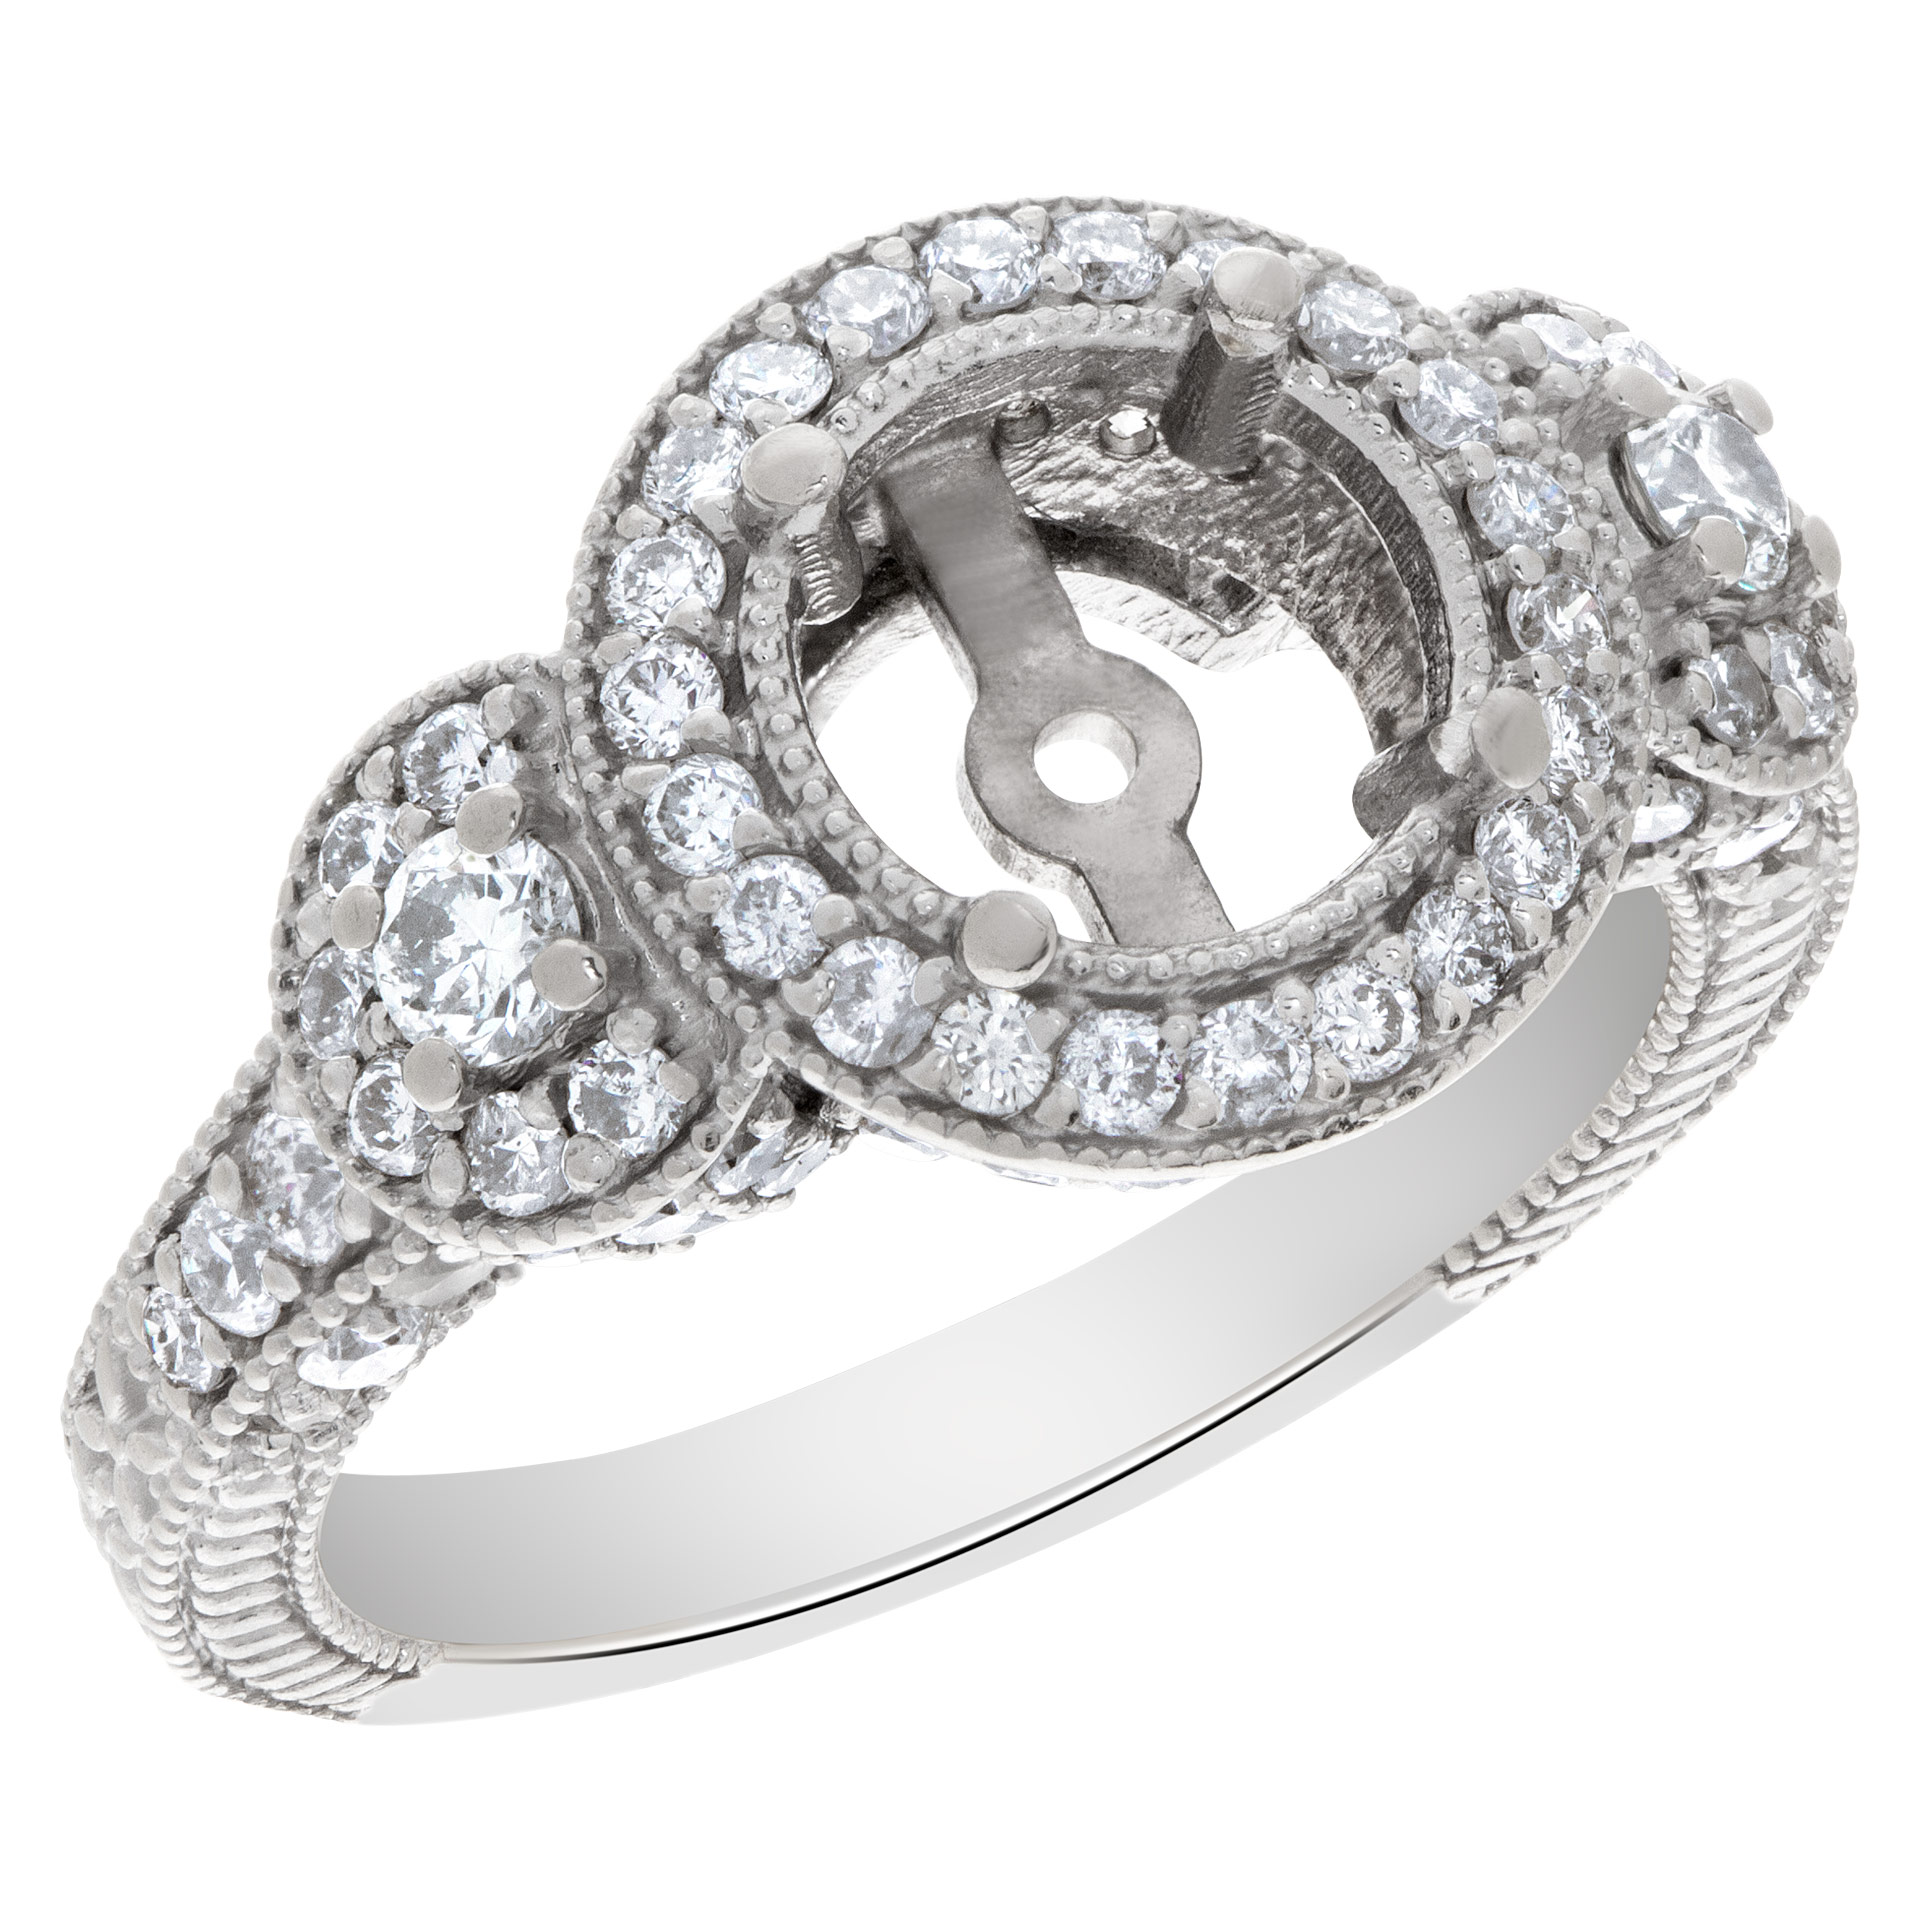 Beautiful diamond setting with approximately 1 carat full cut round brilliant diamonds, set in 14k white gold